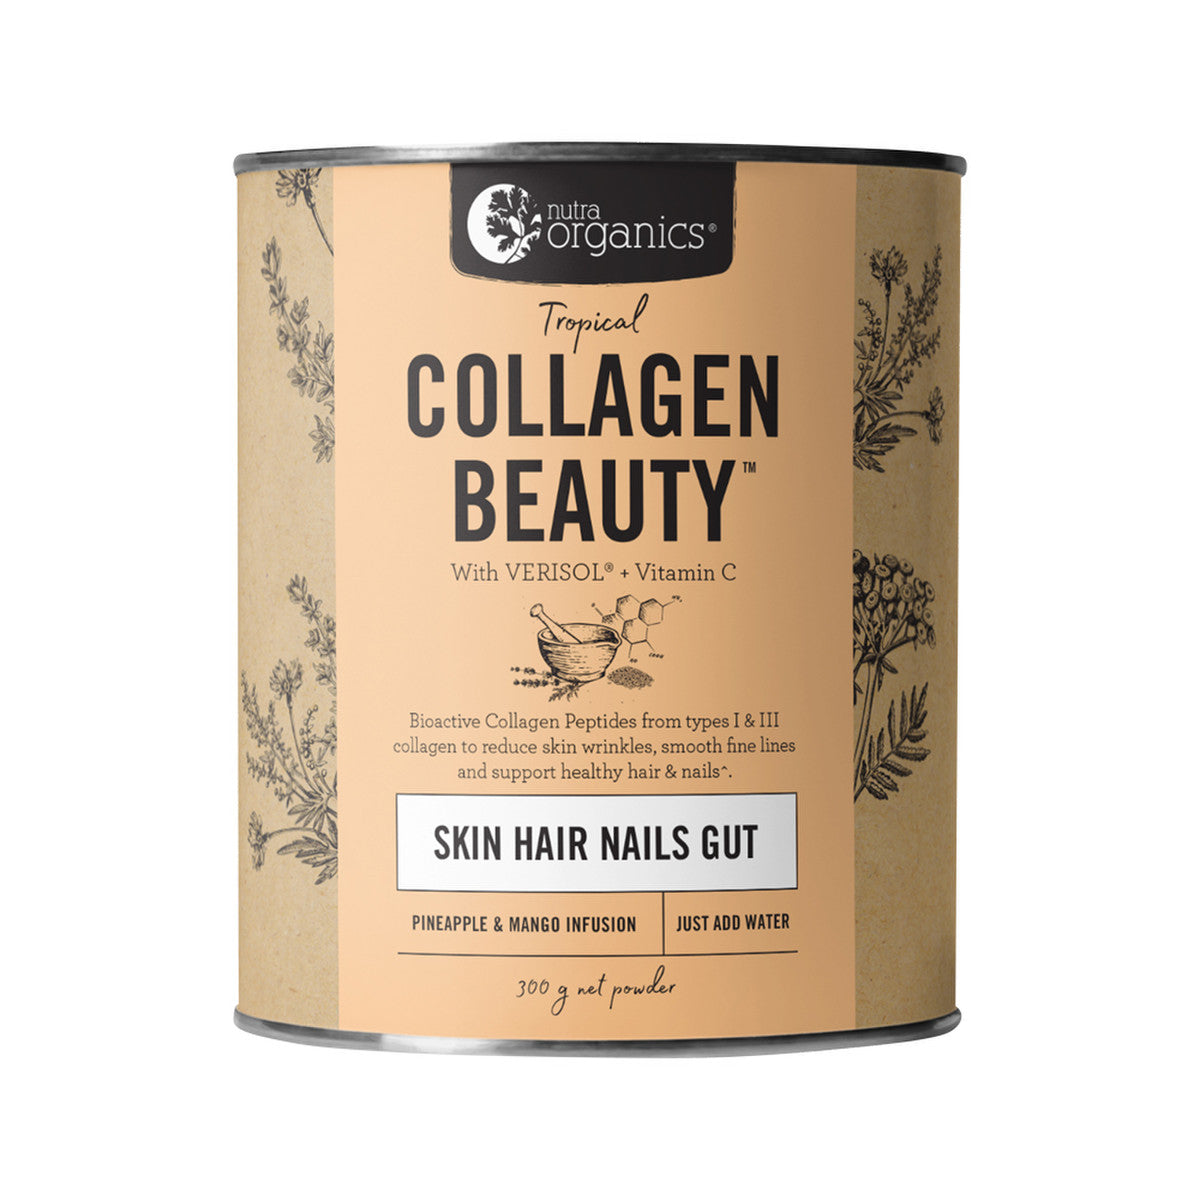 Nutra Organics - Collagen Beauty Tropical